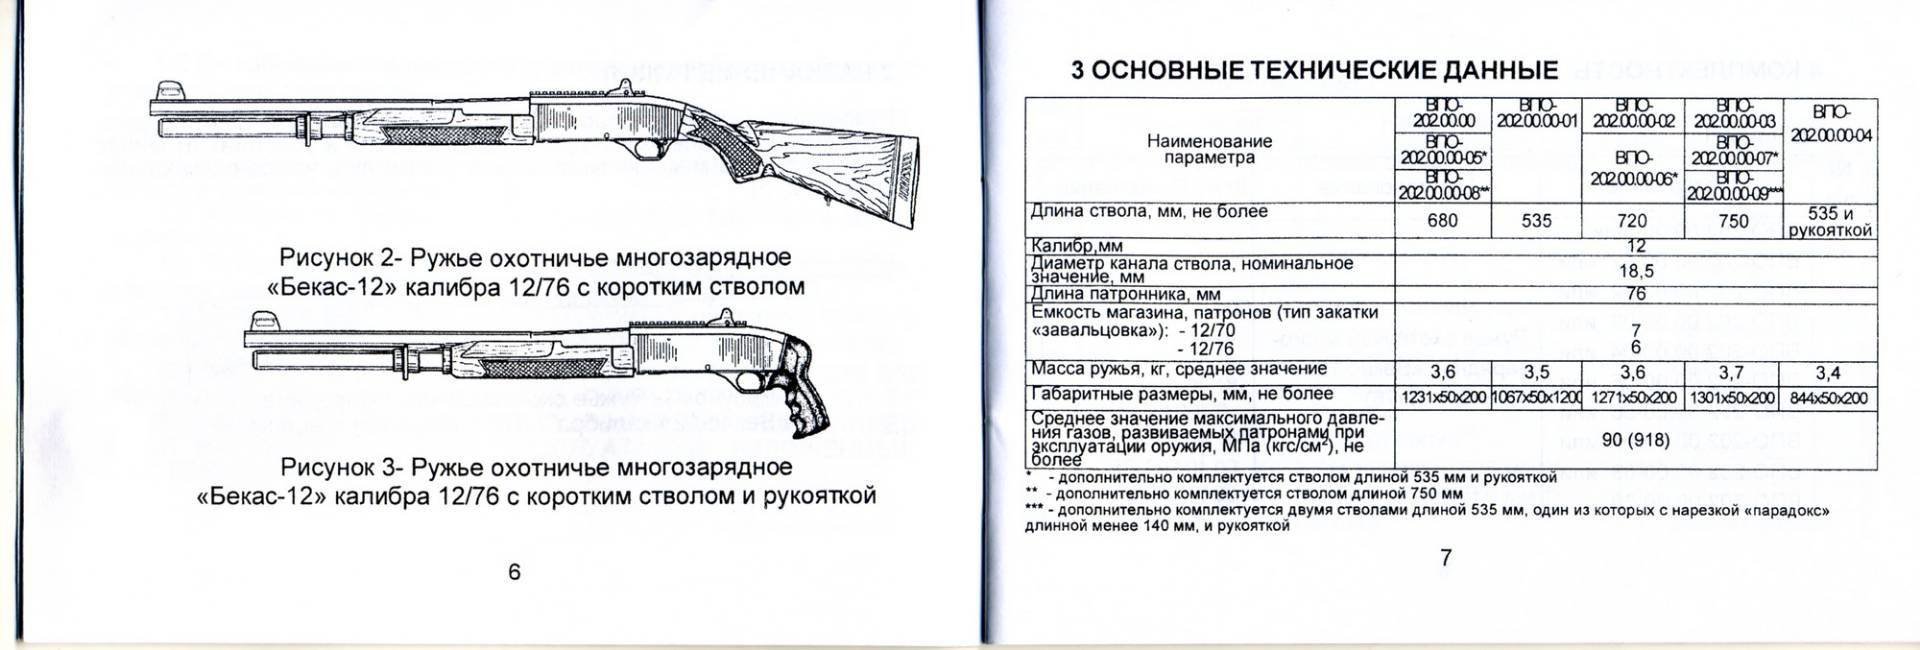 Мр-155 ружье калибра 12 / 20 - характеристики, фото, ттх